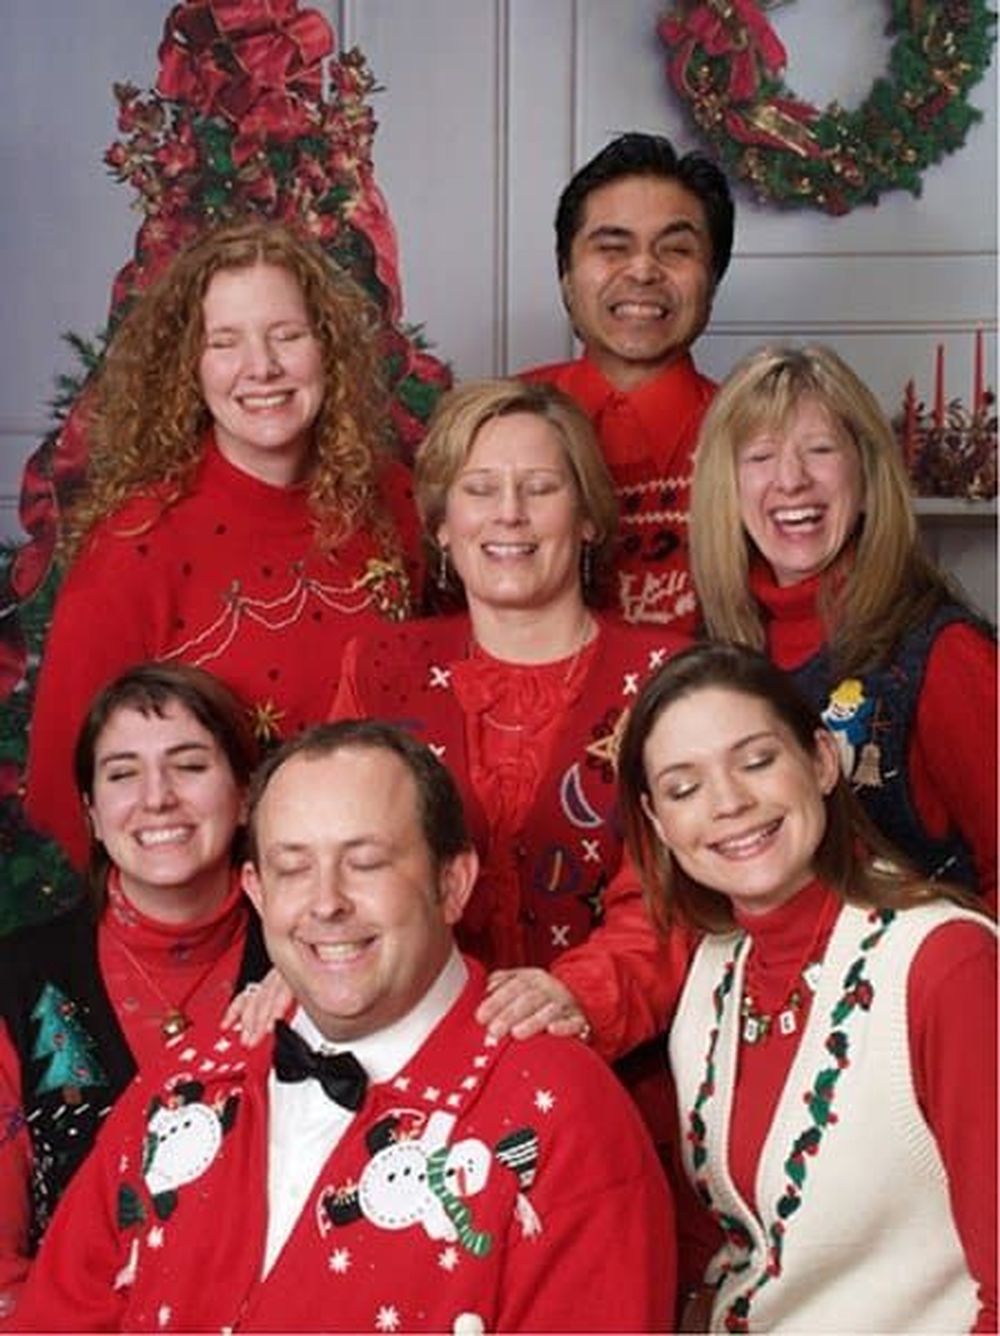 The entire family closed their eyes christmas card photo ideas